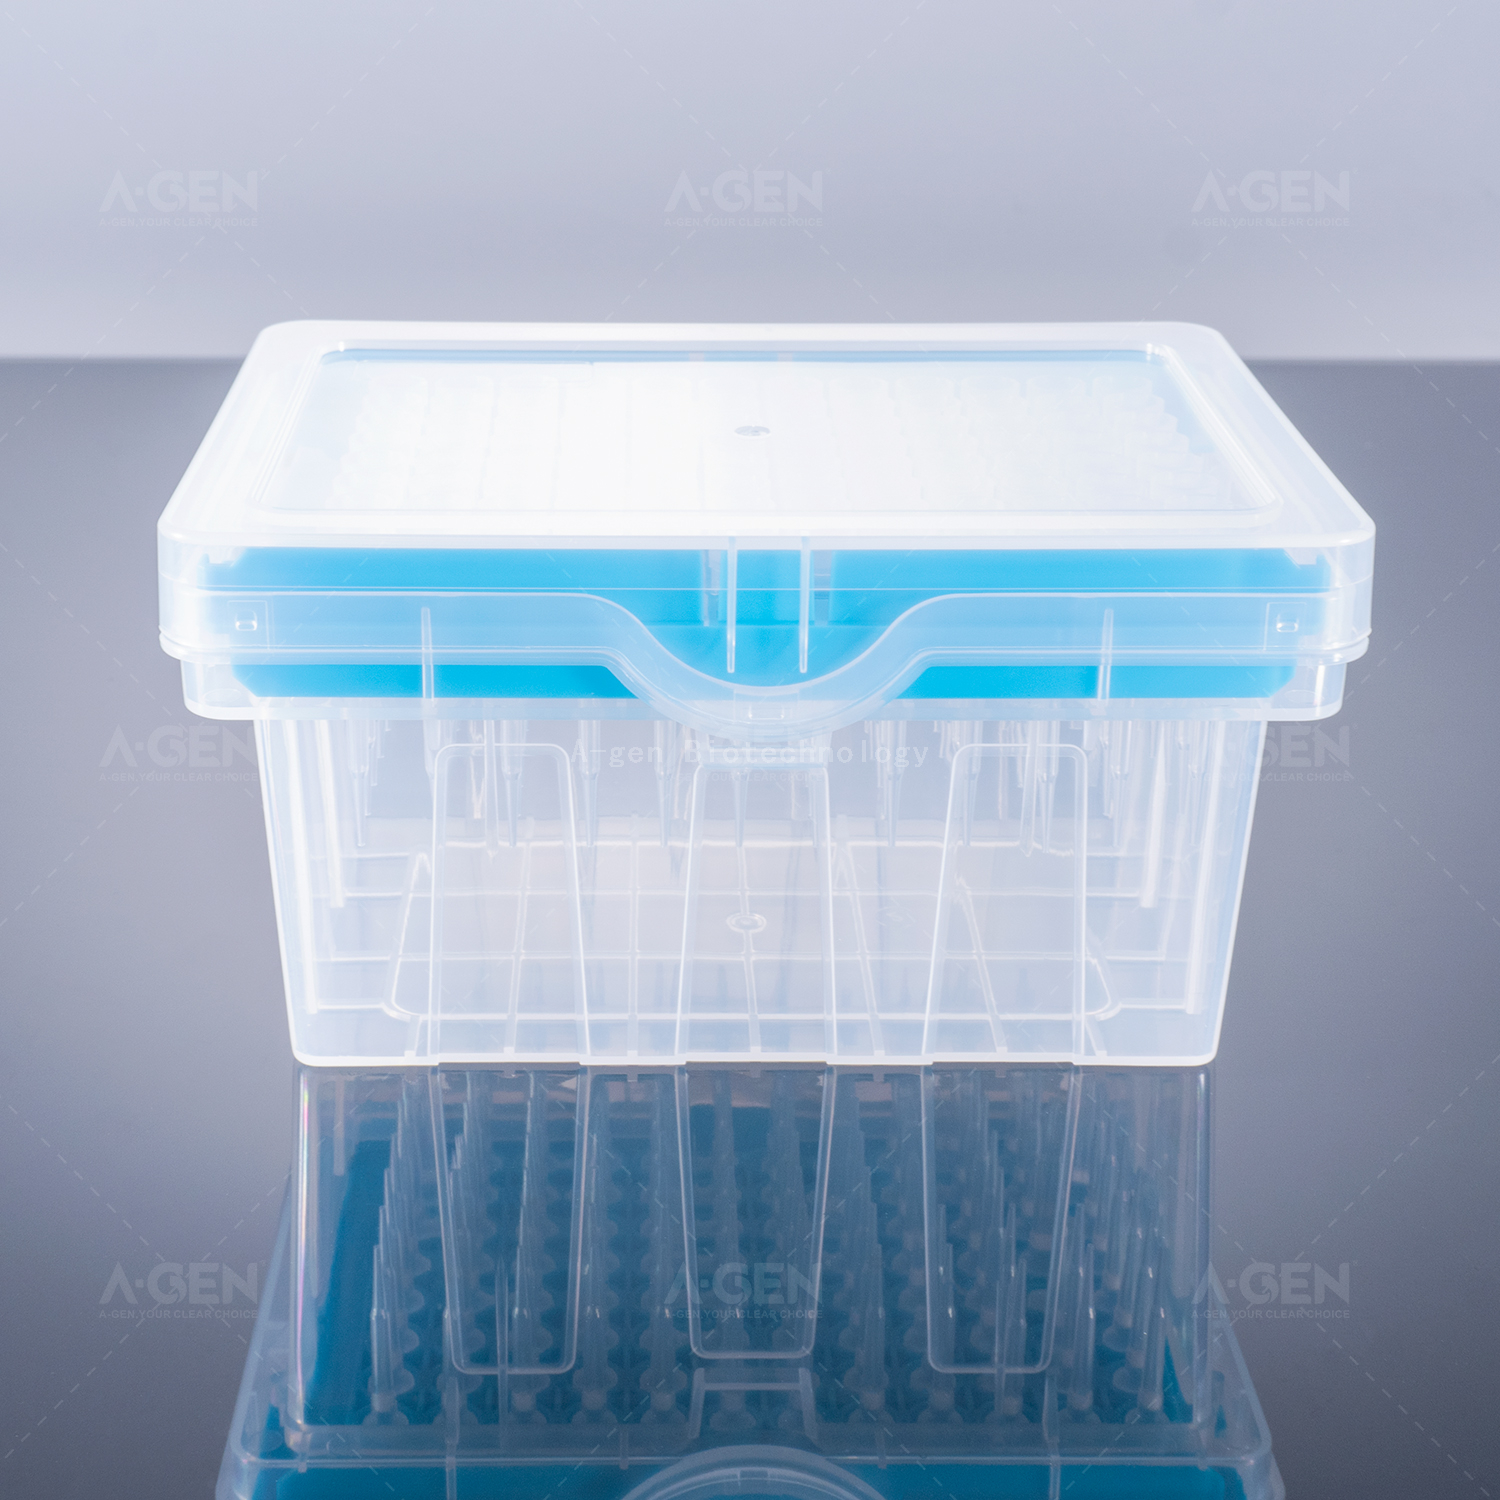 Tecan LiHa 20μL 透明 PP 移液器吸头（架式，灭菌），用于液体转移，带过滤器 TTF-20-RSL 低残留